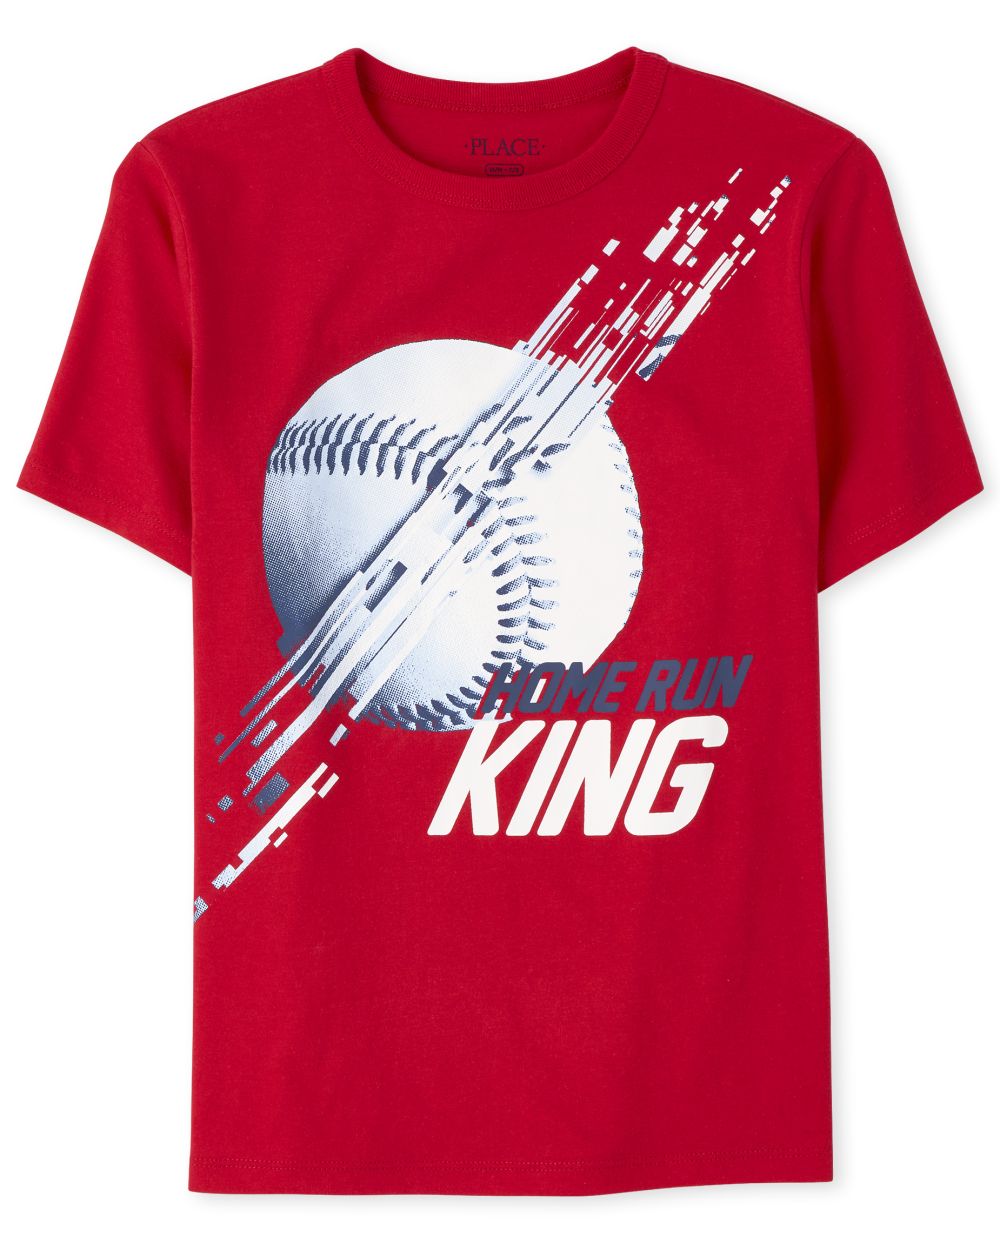 Boys Short Sleeve 'Home Run King' Baseball Graphic Tee